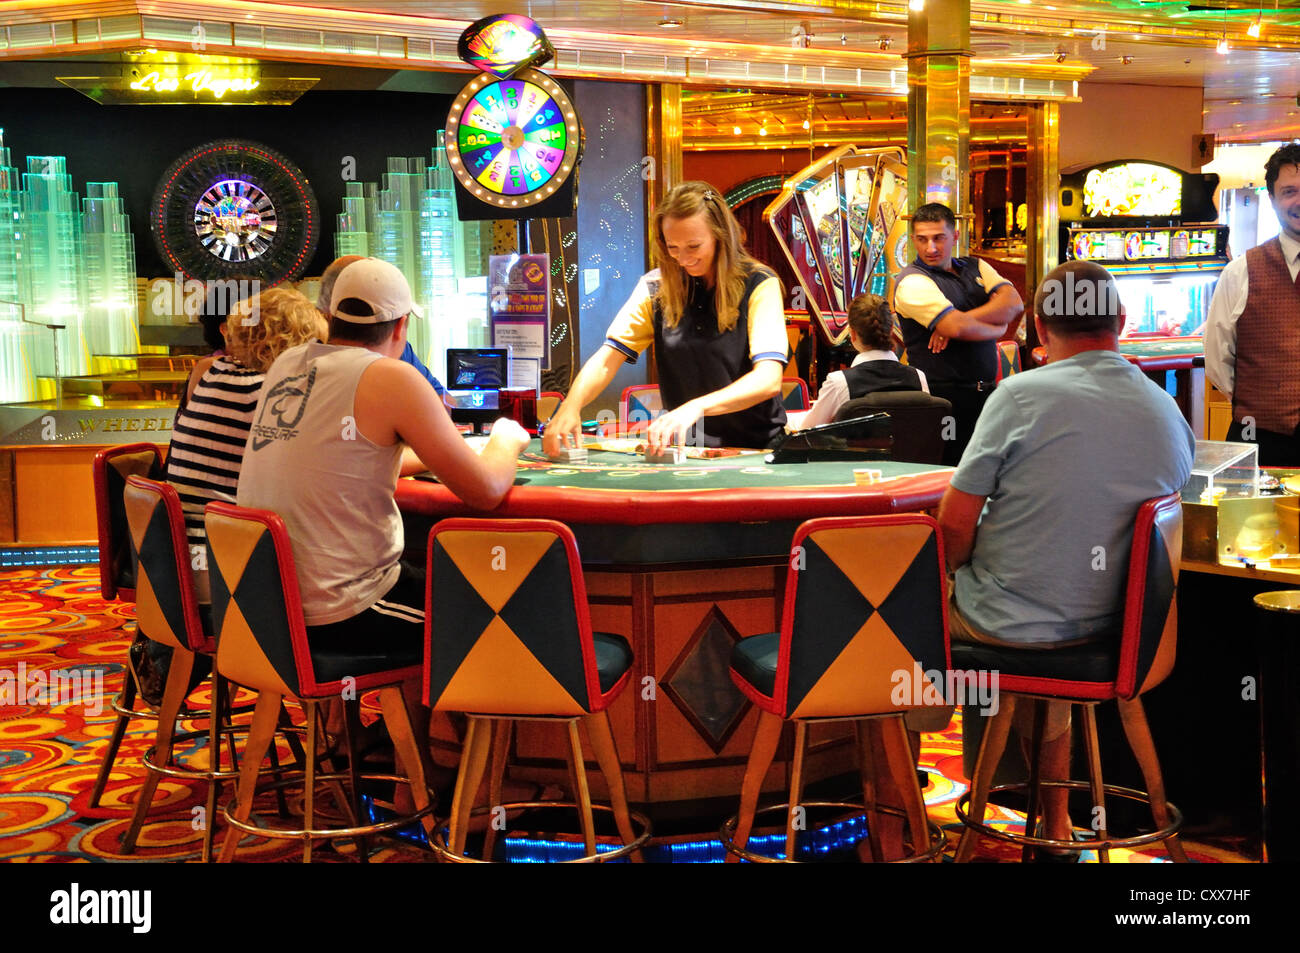 Blackjack-Tisch im Casino an Bord Royal Caribbean "Grandeur of the Seas" Kreuzfahrt Schiff, Adria, Mittelmeer, Europa Stockfoto